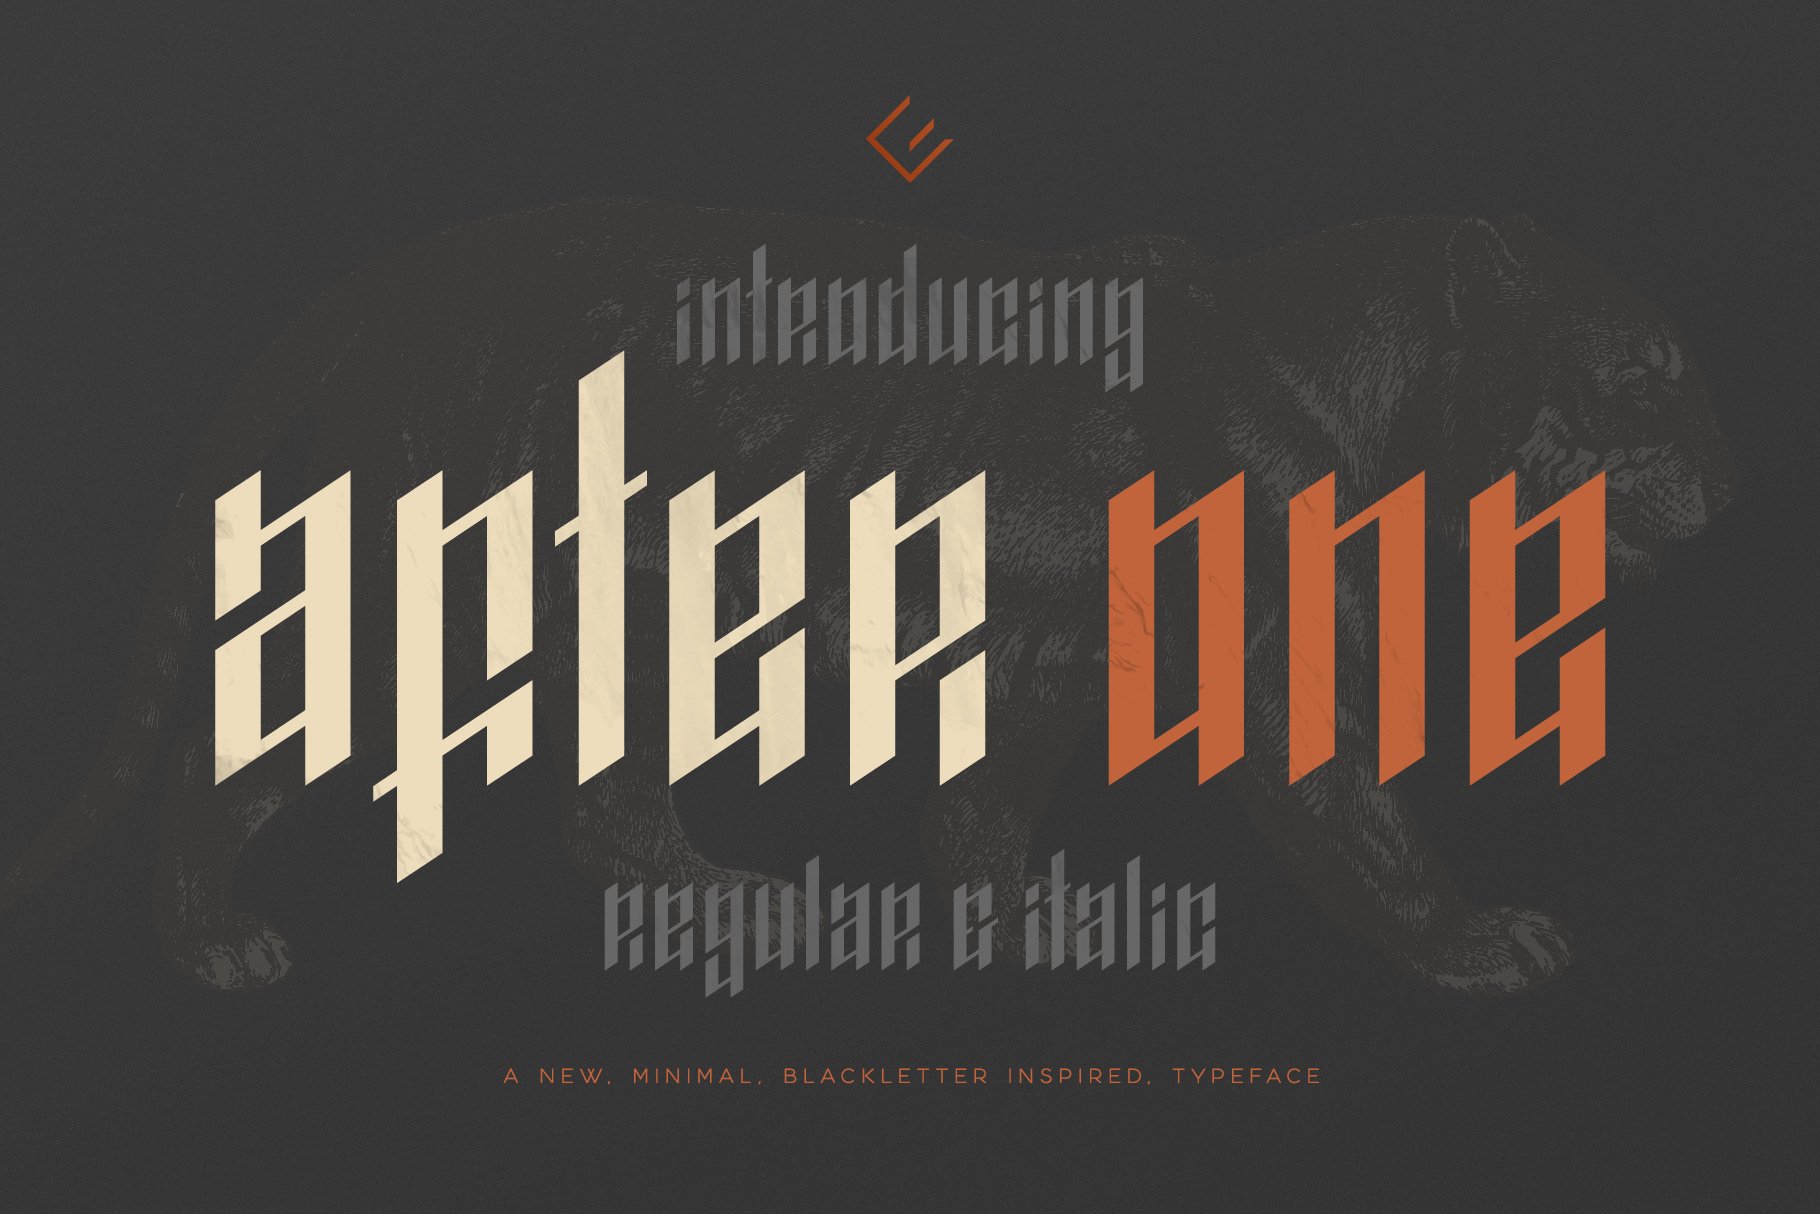 AfterOne - Blackletter Inspired Font cover image.